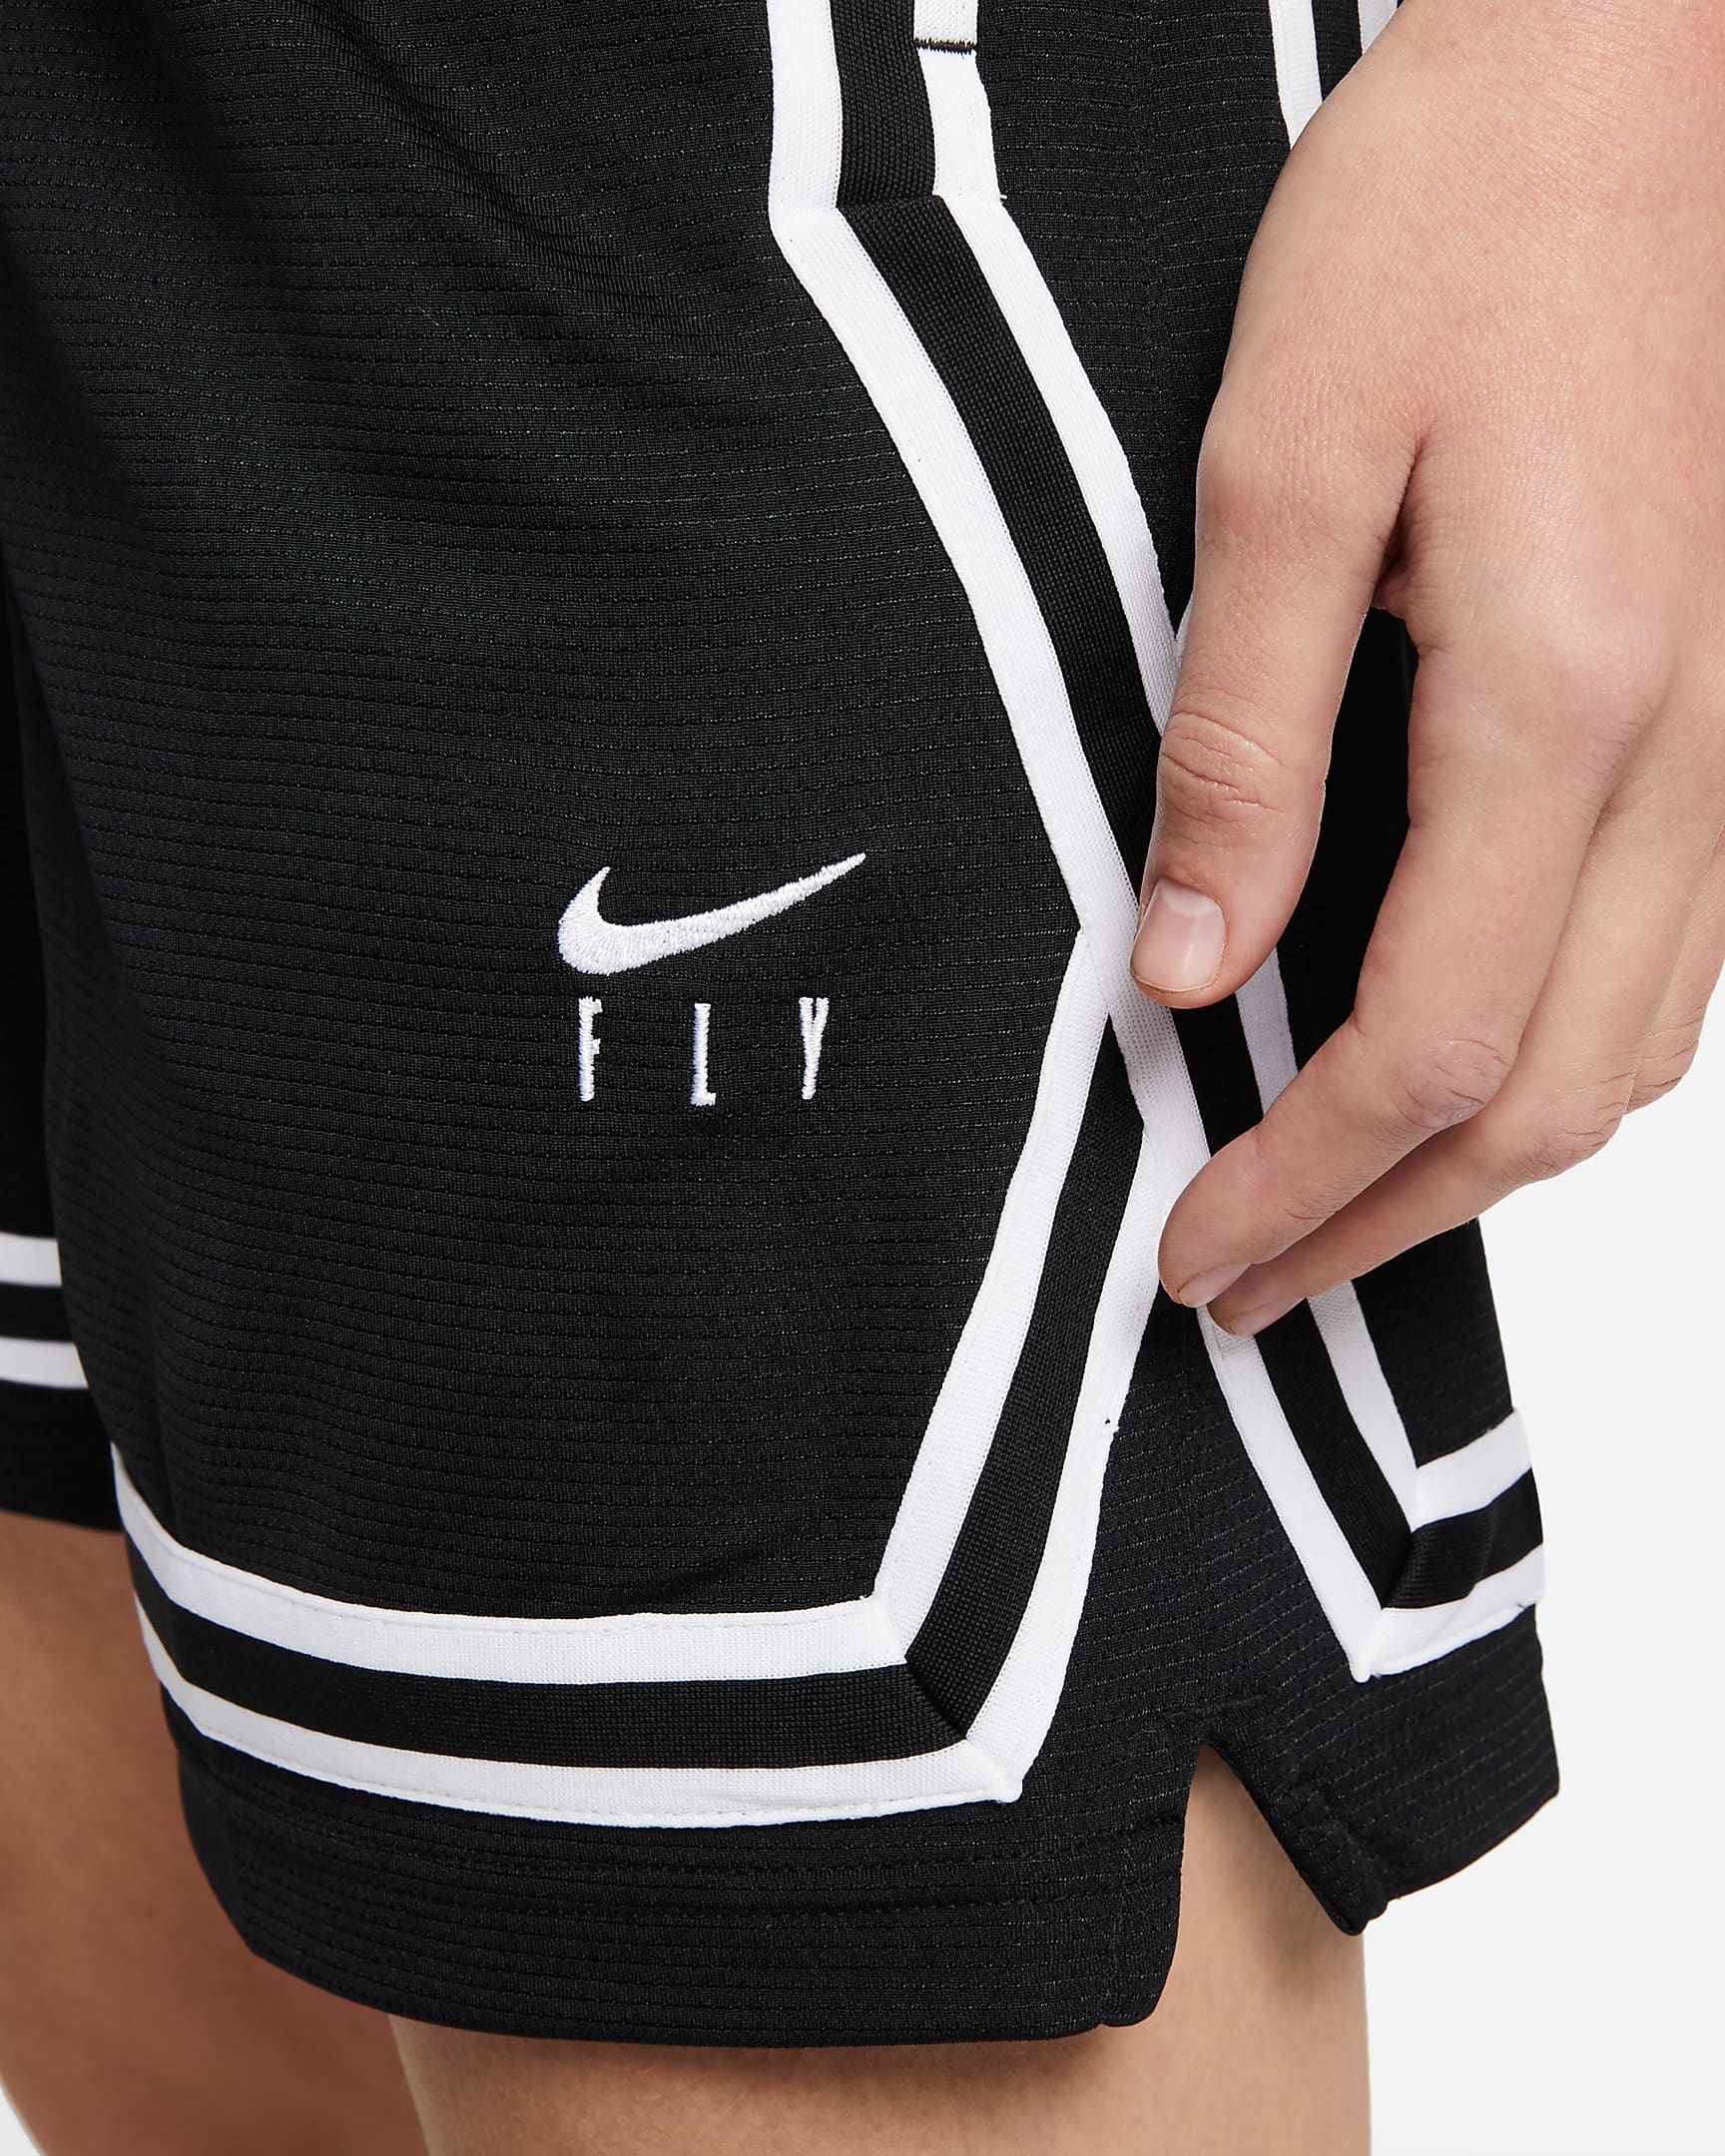 Nike Fly Crossover Pantalons curts de bàsquet - Dona - Negre/Blanc